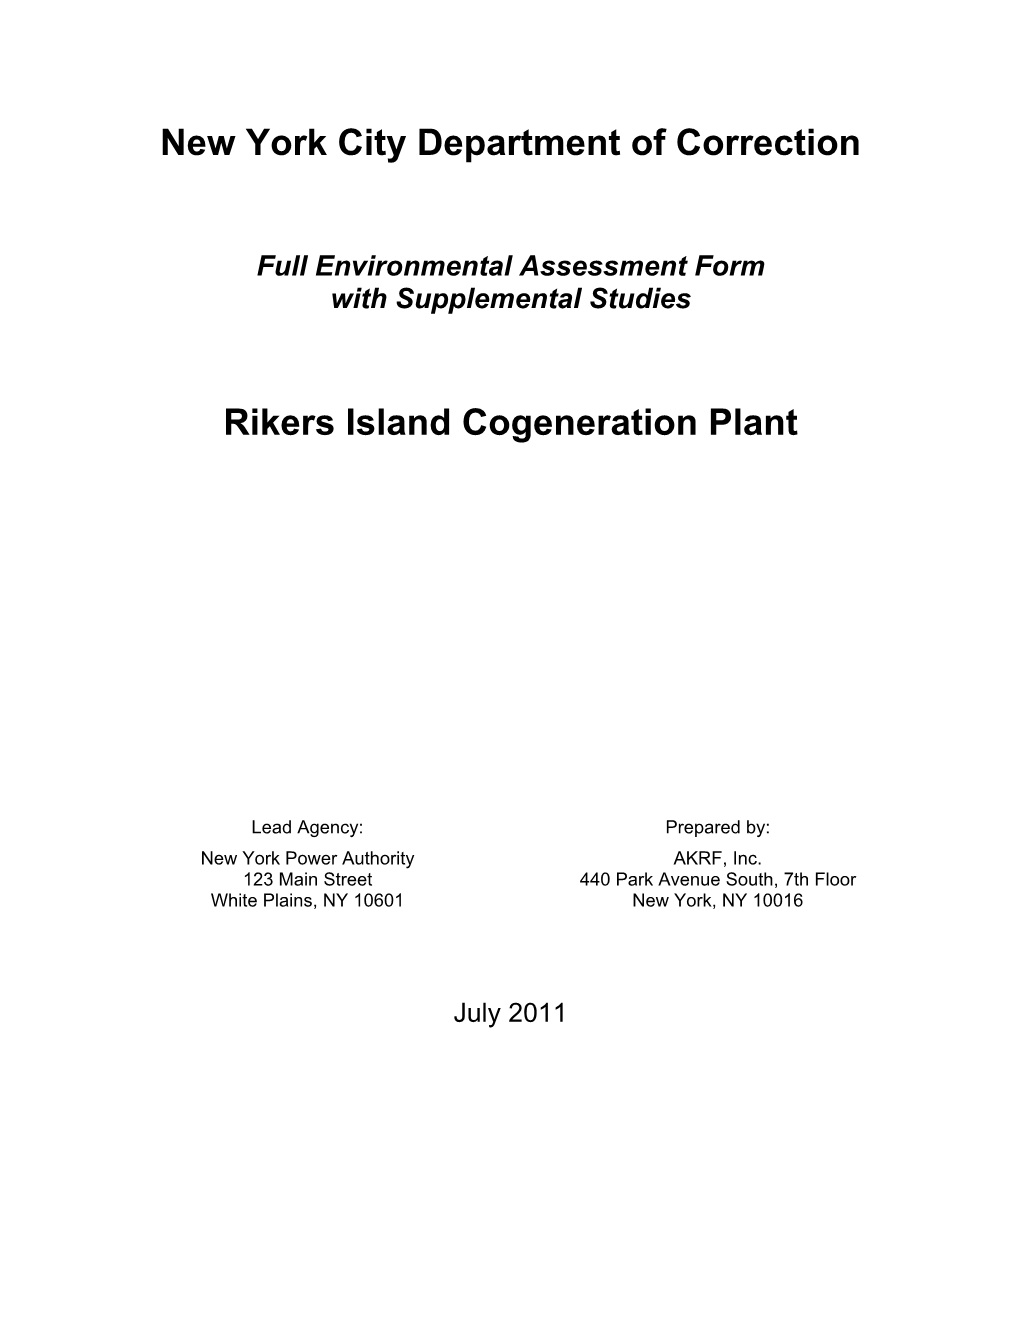 Rikers Island Cogeneration Plant